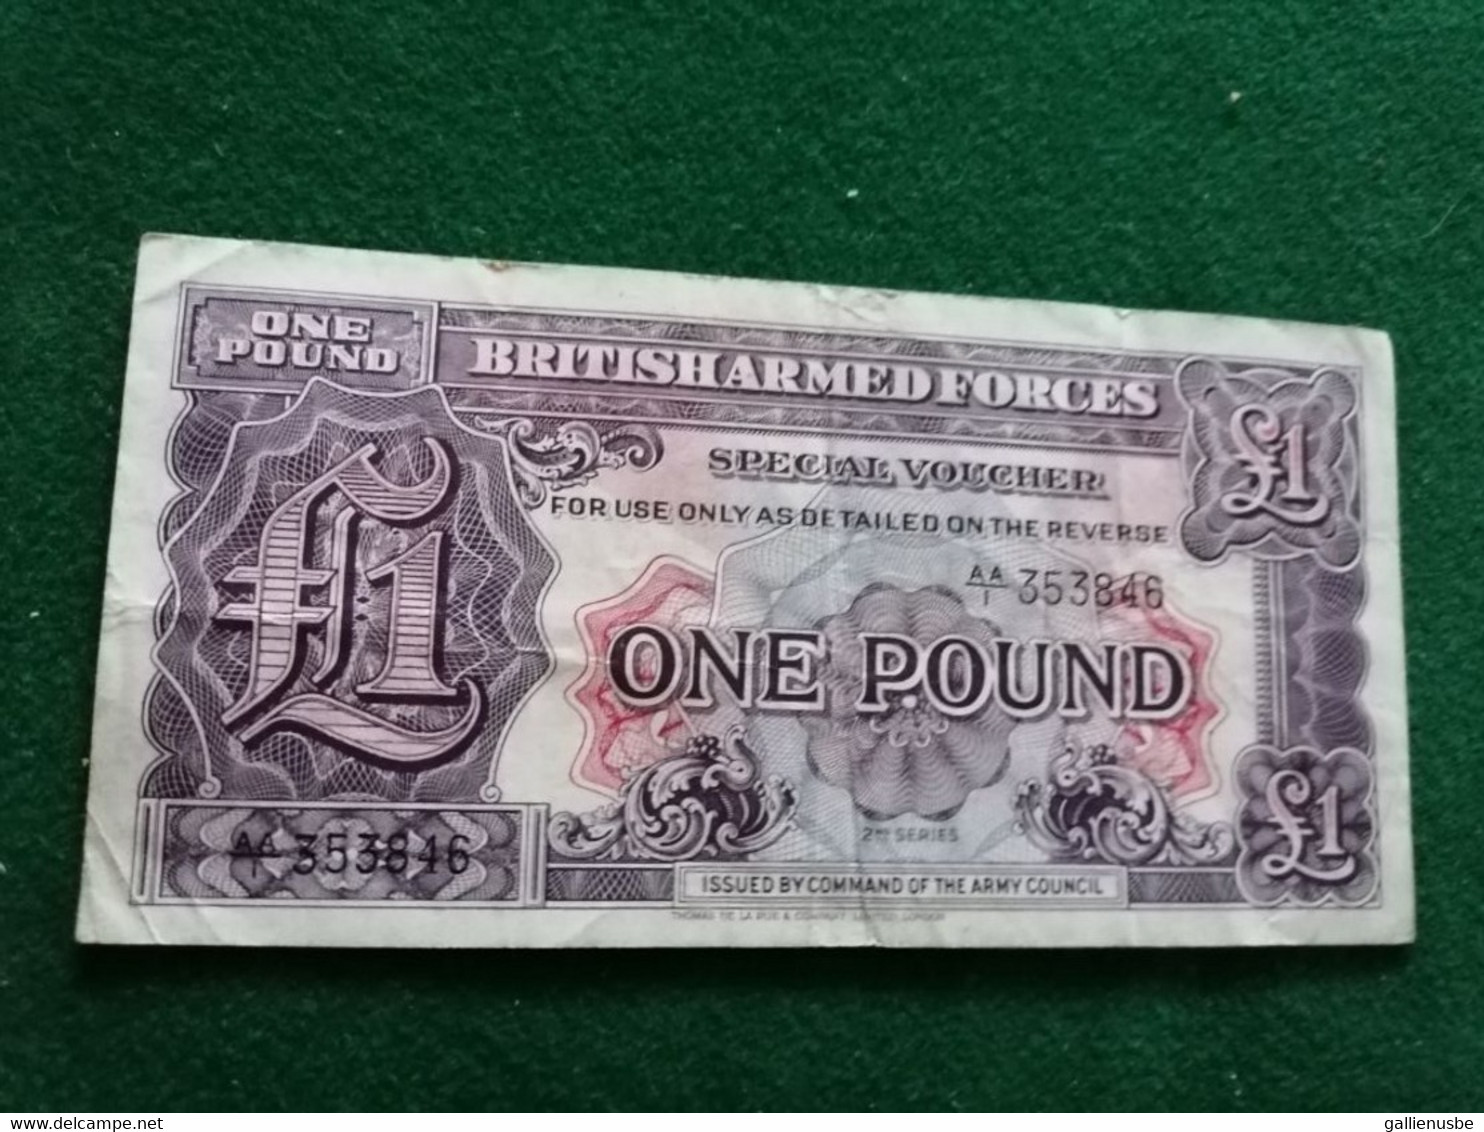 United Kingdom -  GB -  1 £ - 1 Pound  - British Army - Circulé - TB - British Armed Forces & Special Vouchers